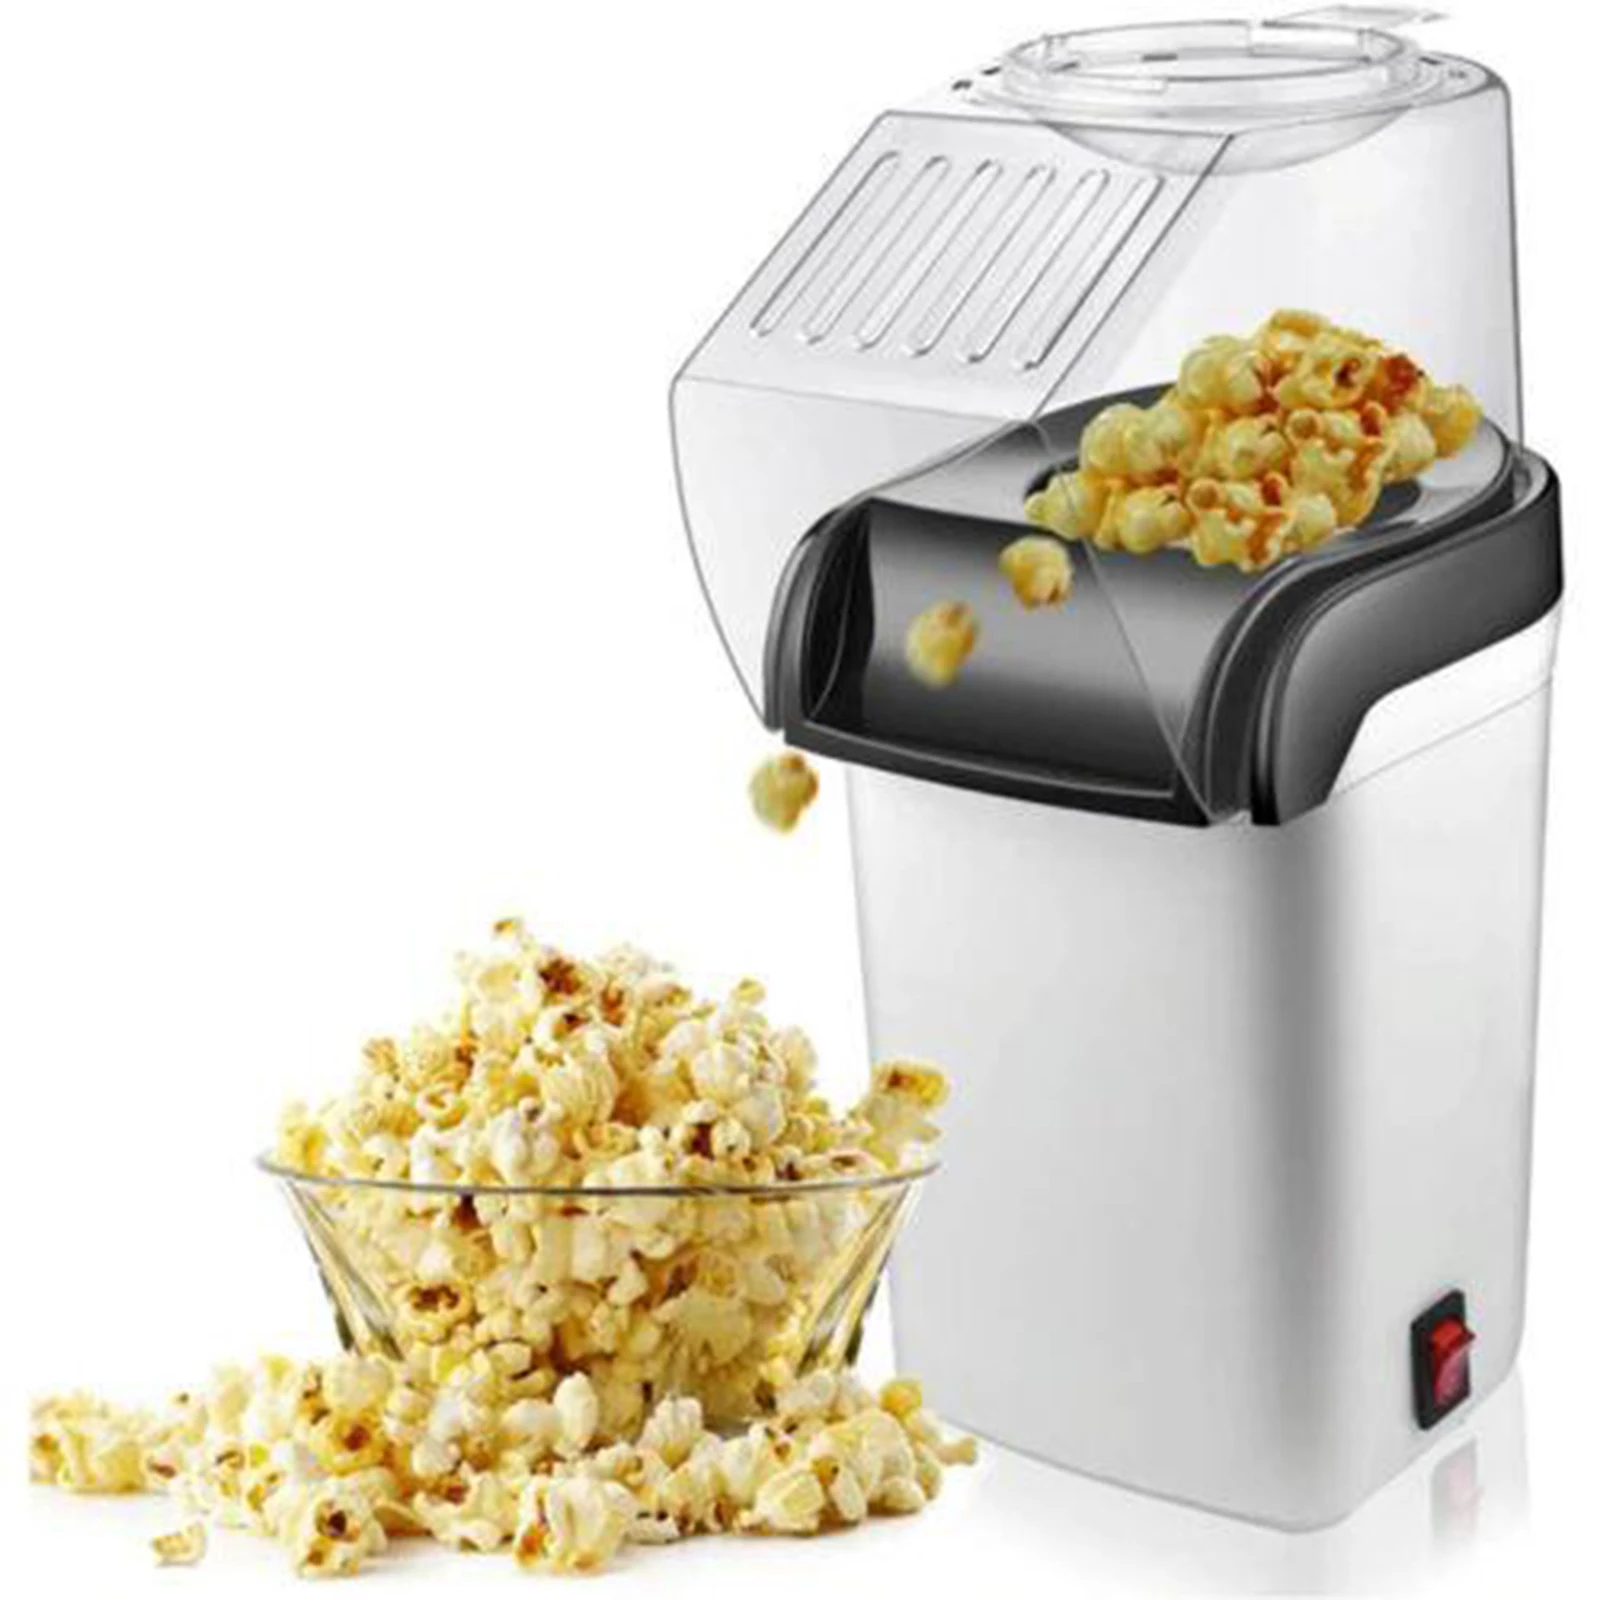 Electric Corn Popcorn Maker Household Automatic Mini Hot Air Popcorn Making Machine DIY  Children Gift